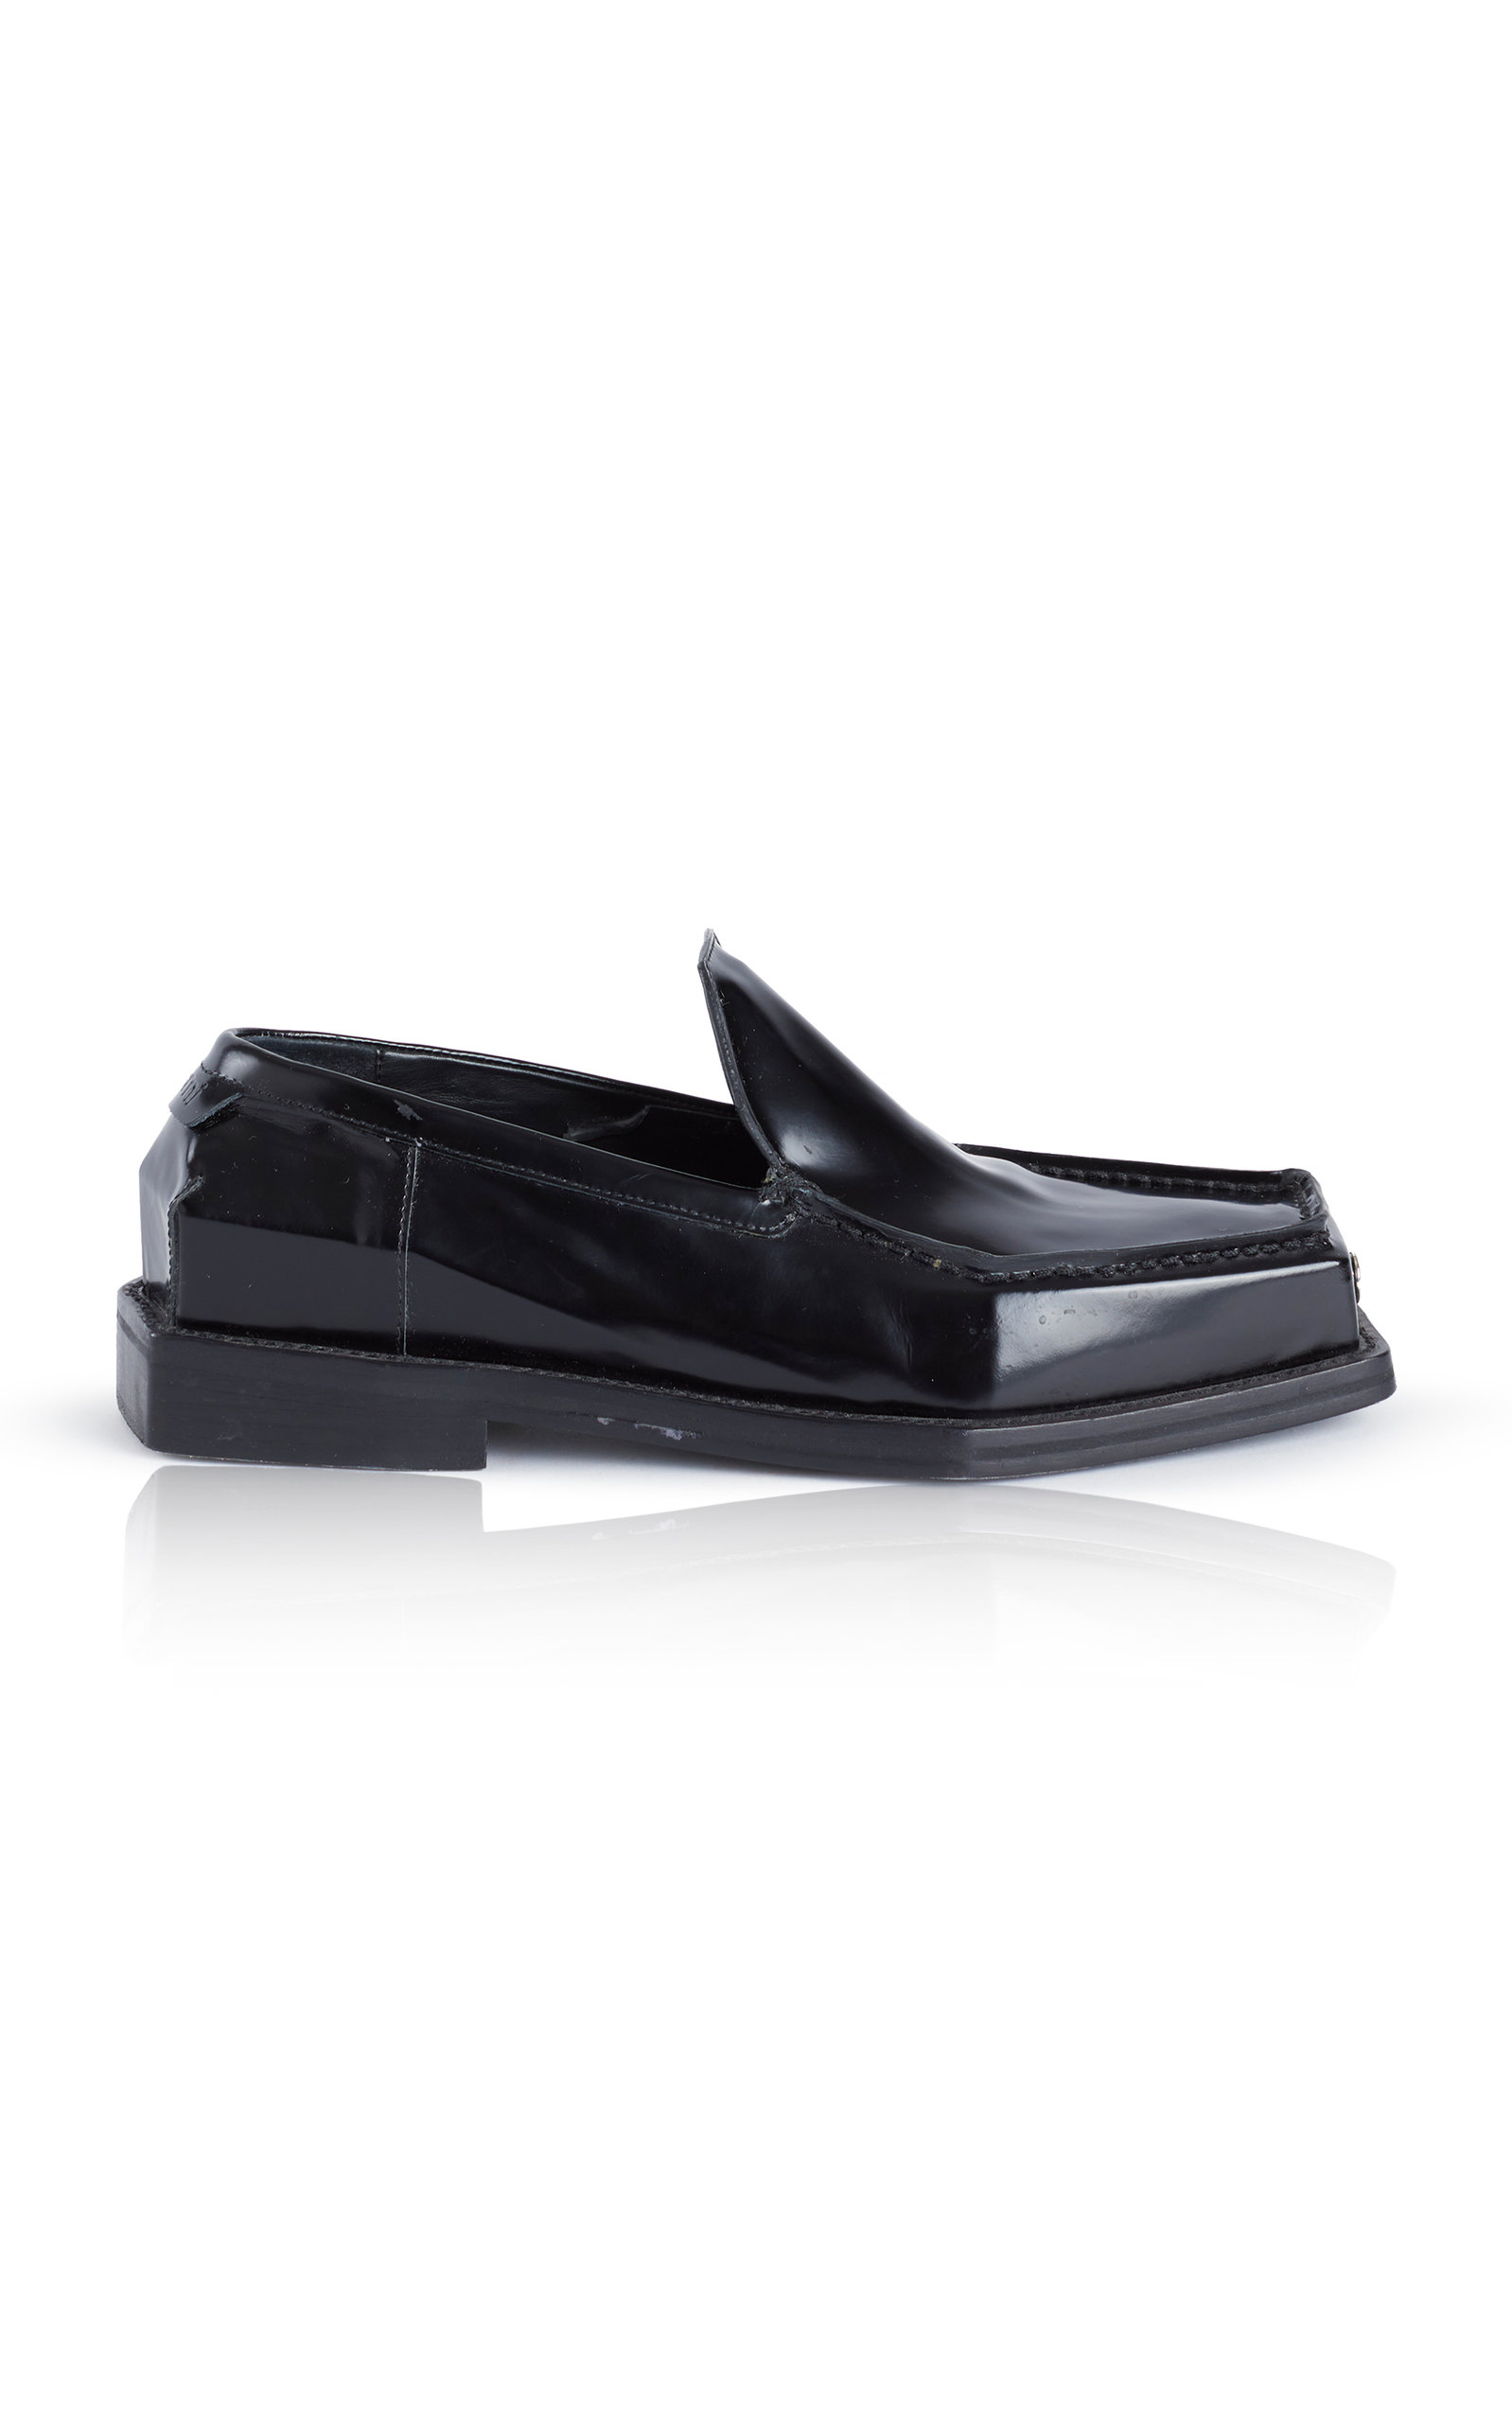 Coperni - Women's 3D Vector Leather Loafers - Black - Only At Moda Operandi